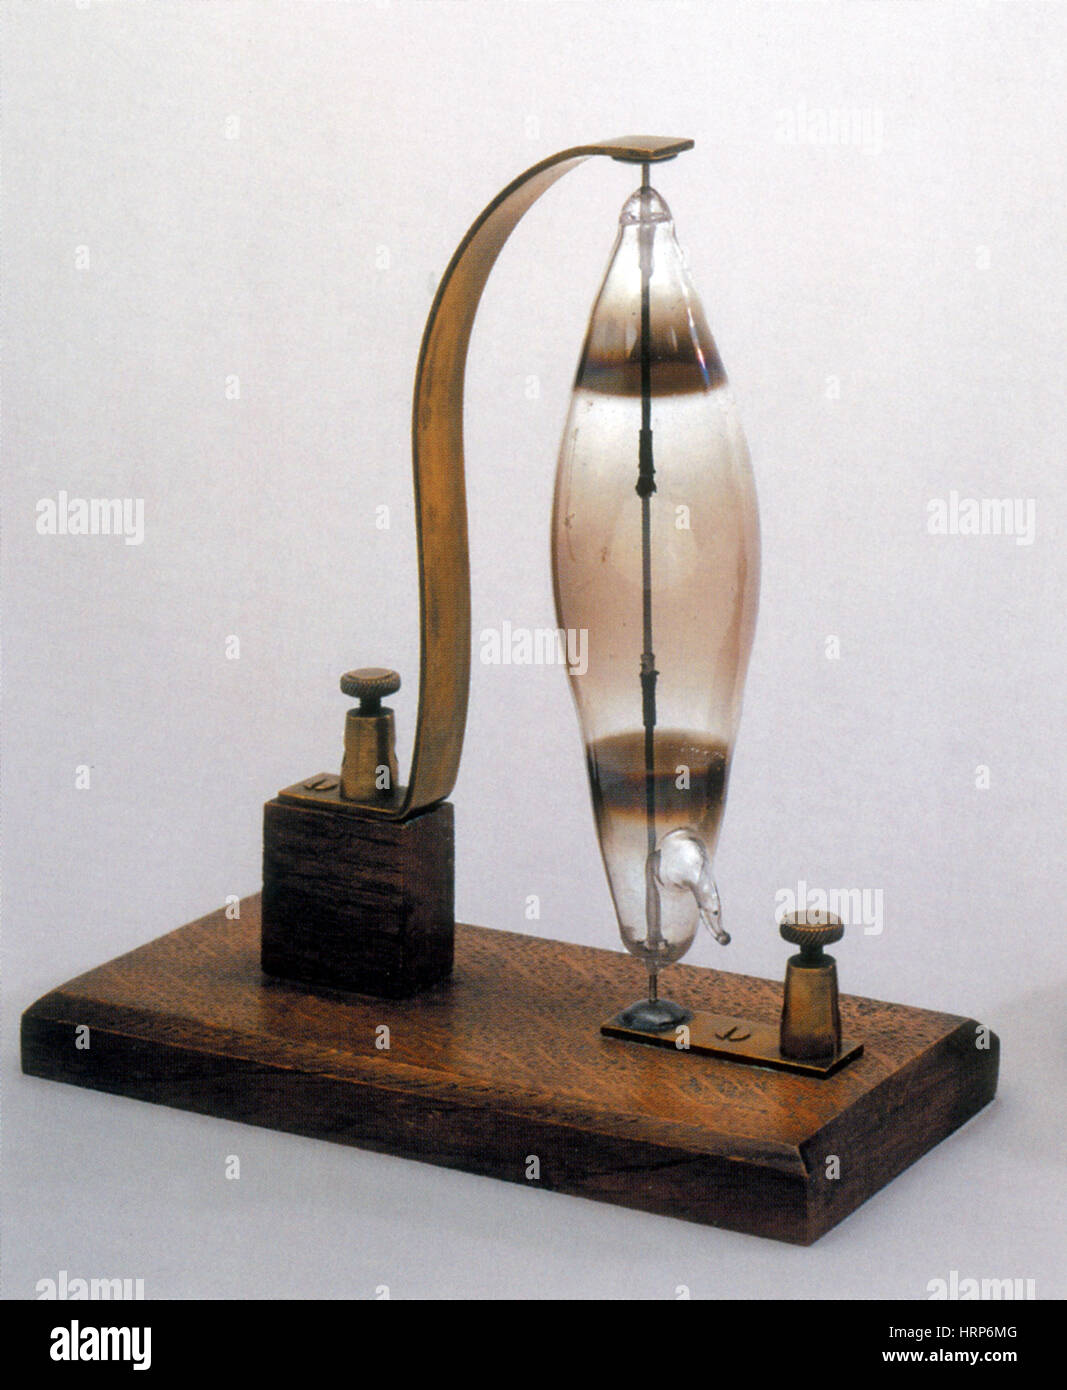 Joseph Schwan, erste weißglühende Glühlampe, 1878 Stockfotografie - Alamy